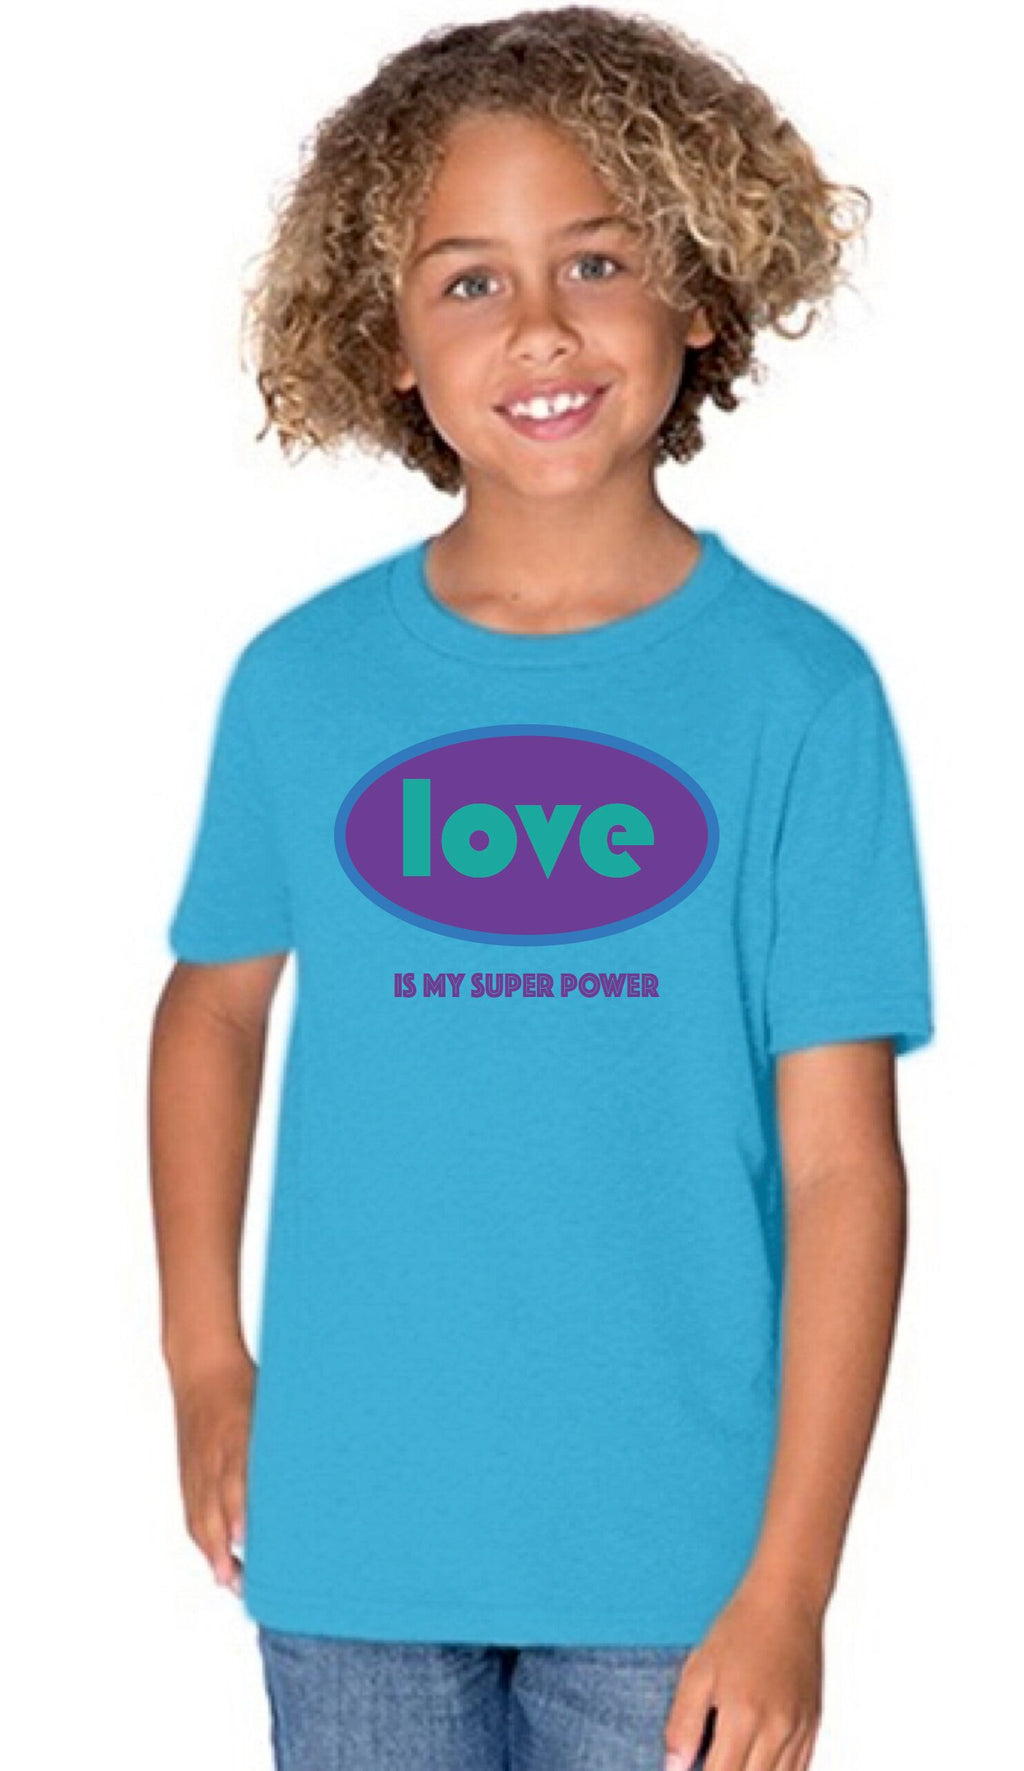 Love is My Superpower Kids Tee (Ash grey)